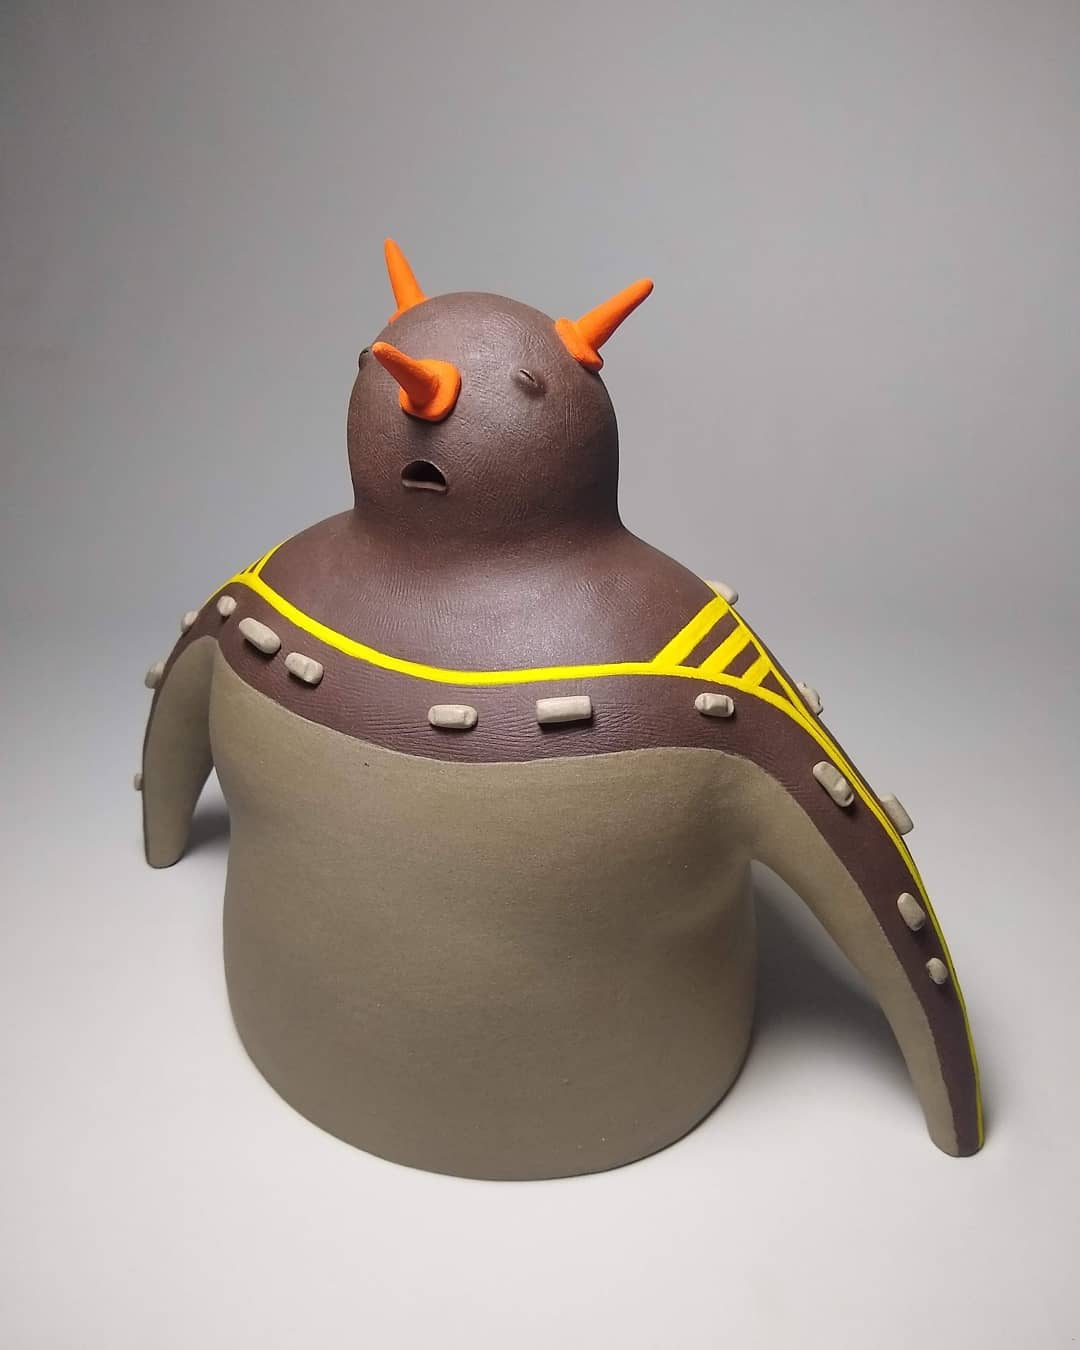 Amusing Ceramic Sculptures Of Quirky Creatures By Luciano Polverigiani (26)